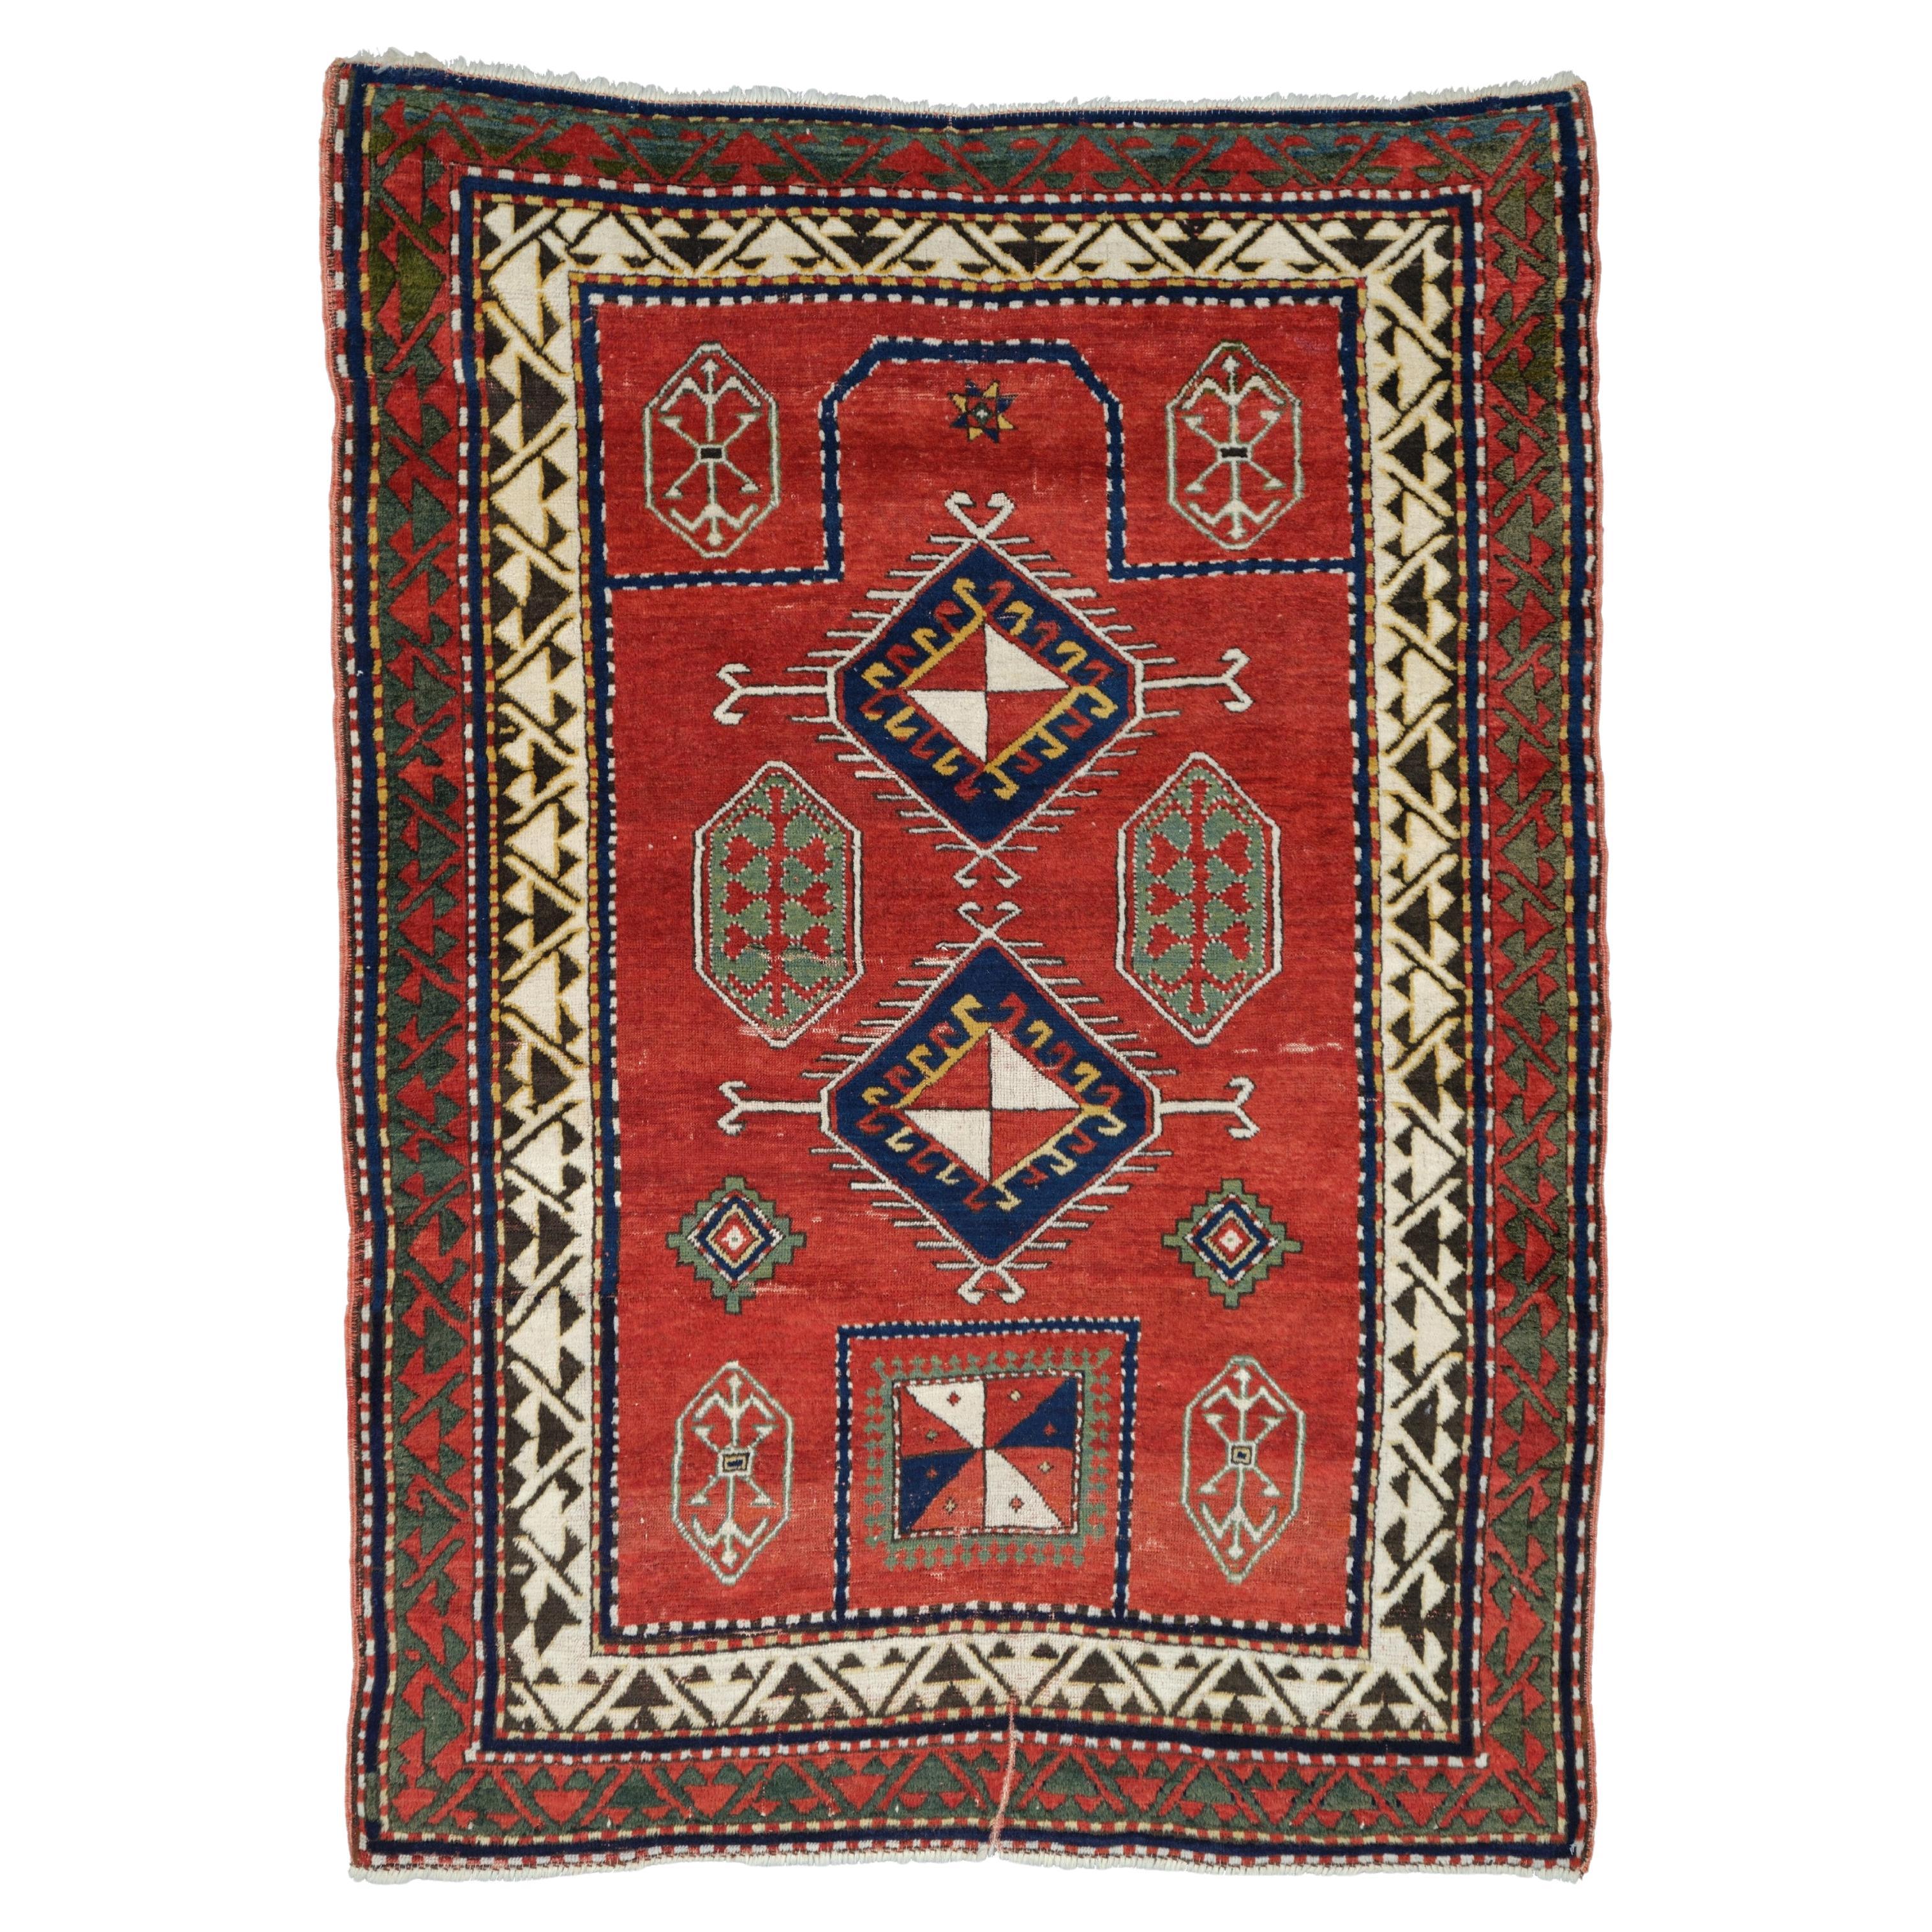 Antique Bordjalou Prayer Rug - 19th Century Caucasian Bordjalou Rug, Antique Rug